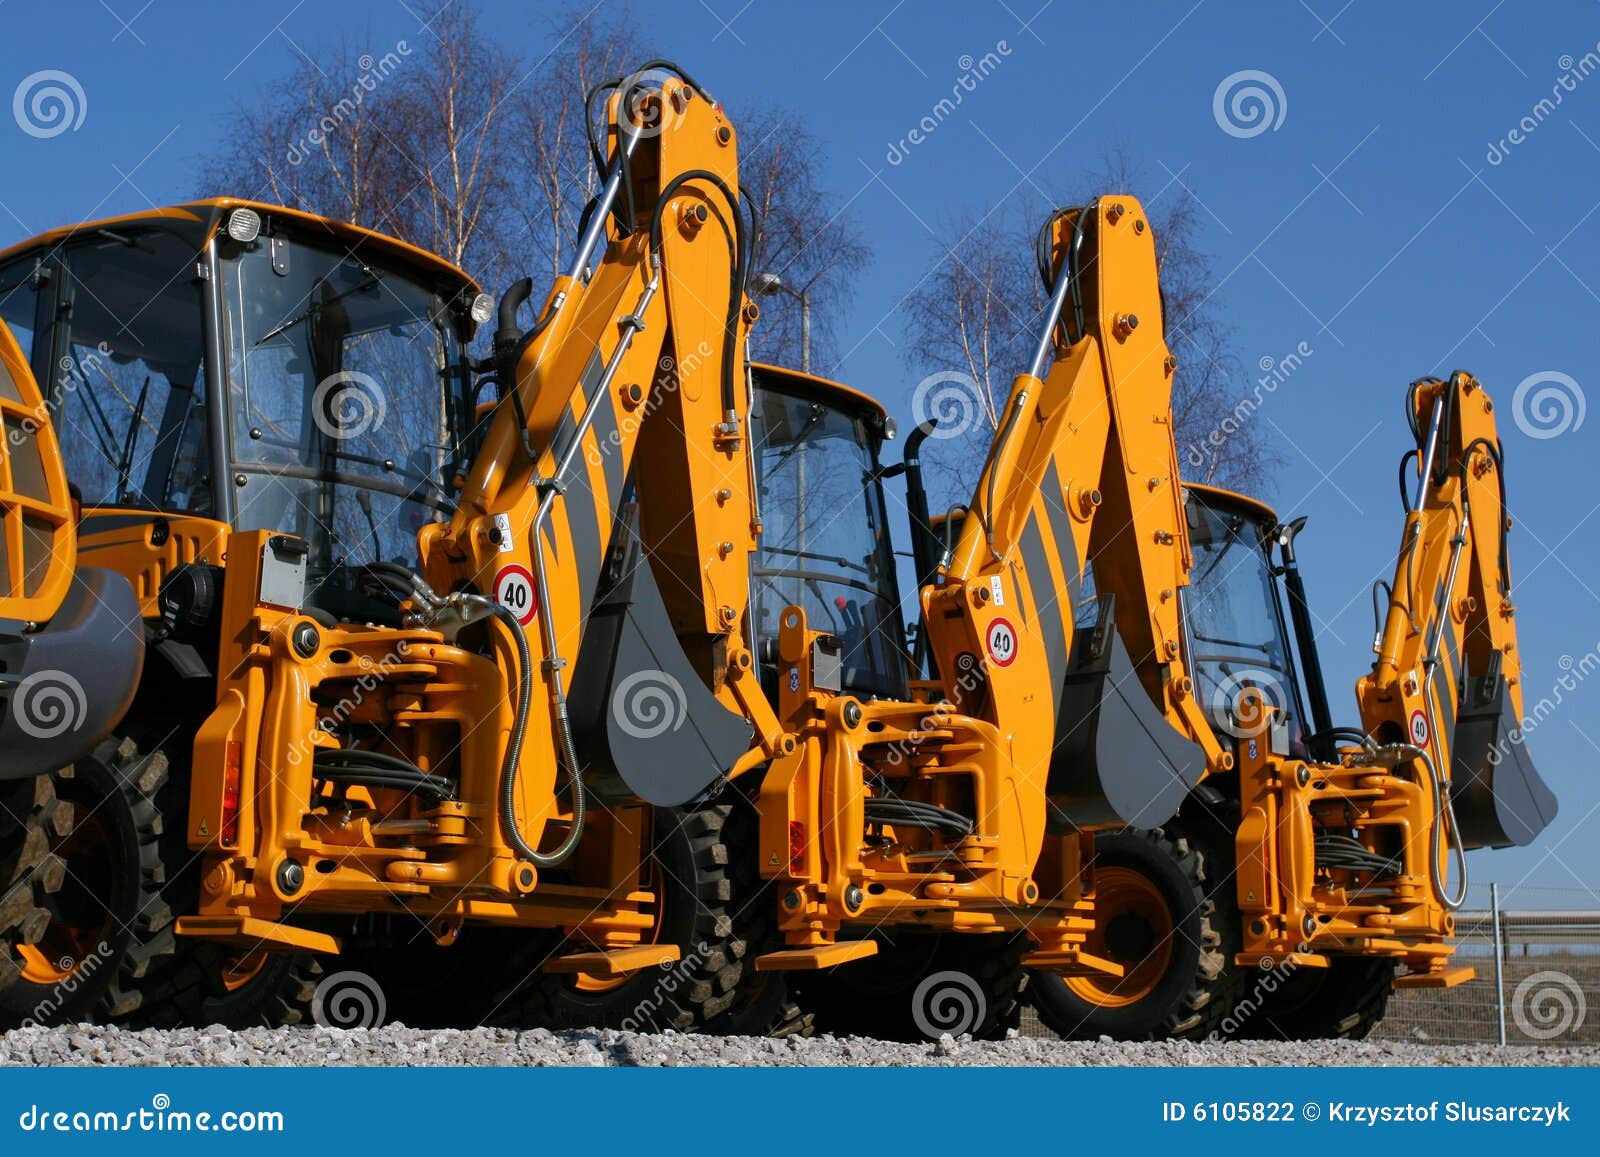 construction machinery